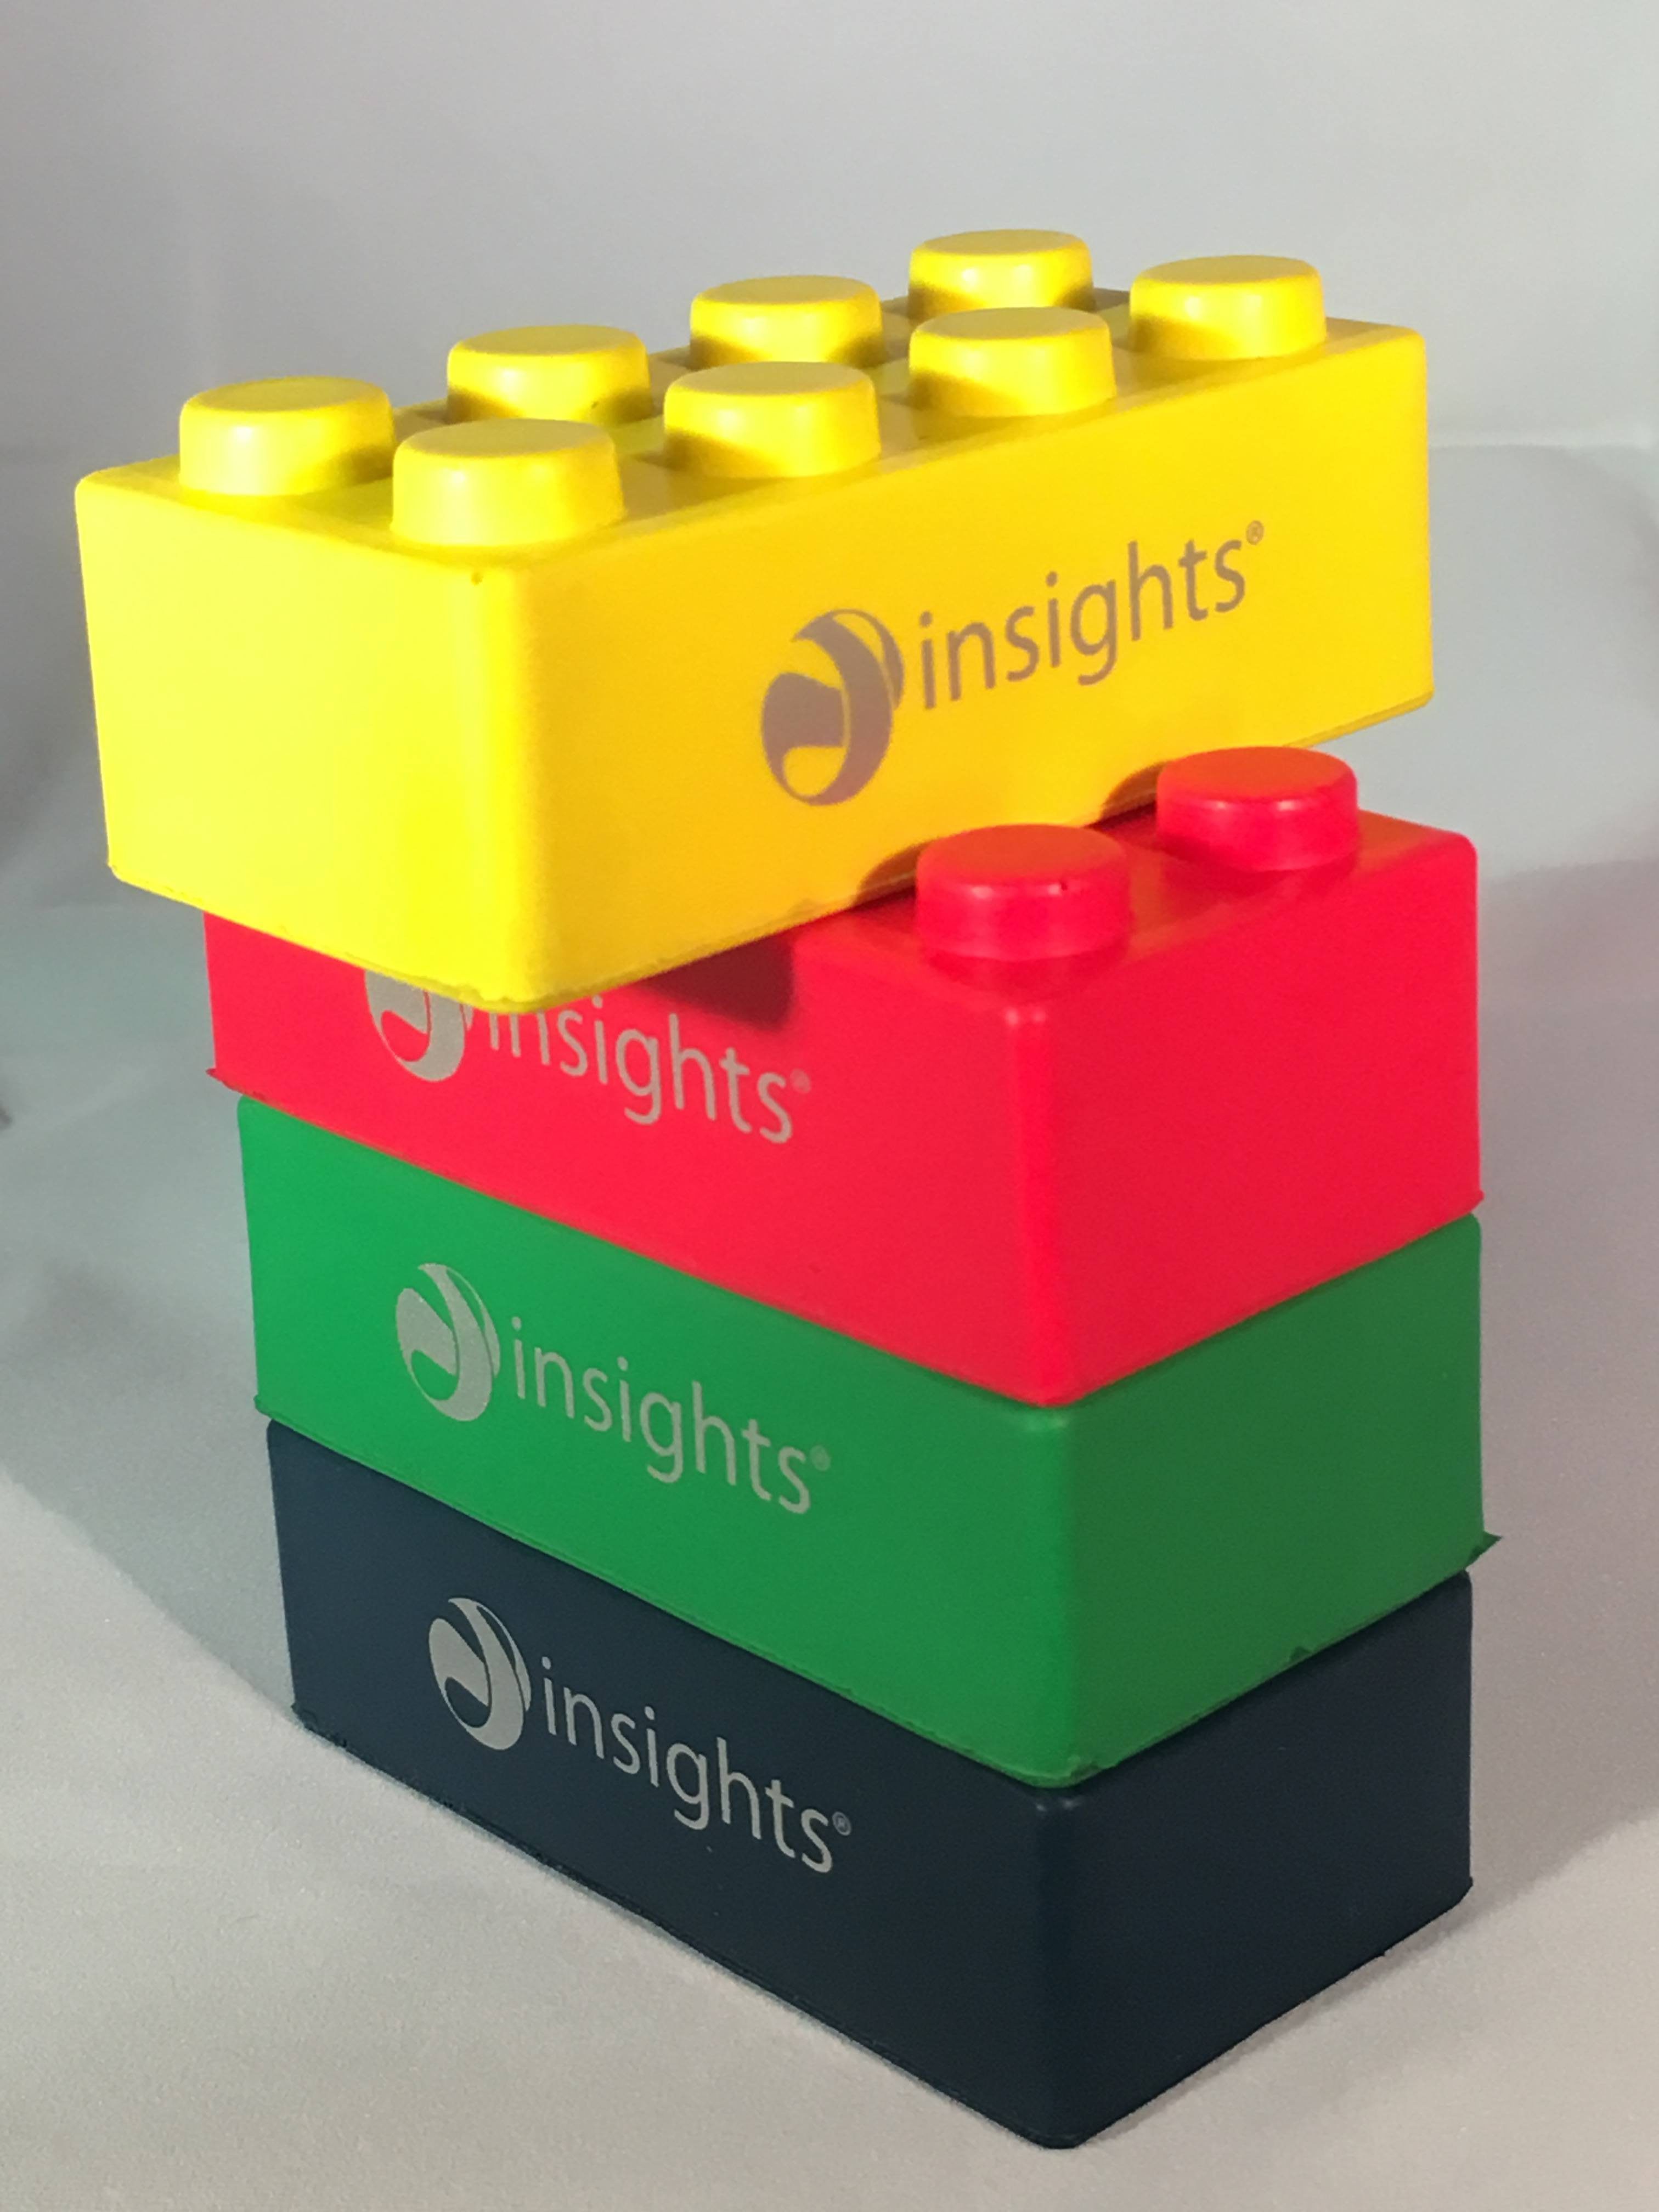 insights lego blocks